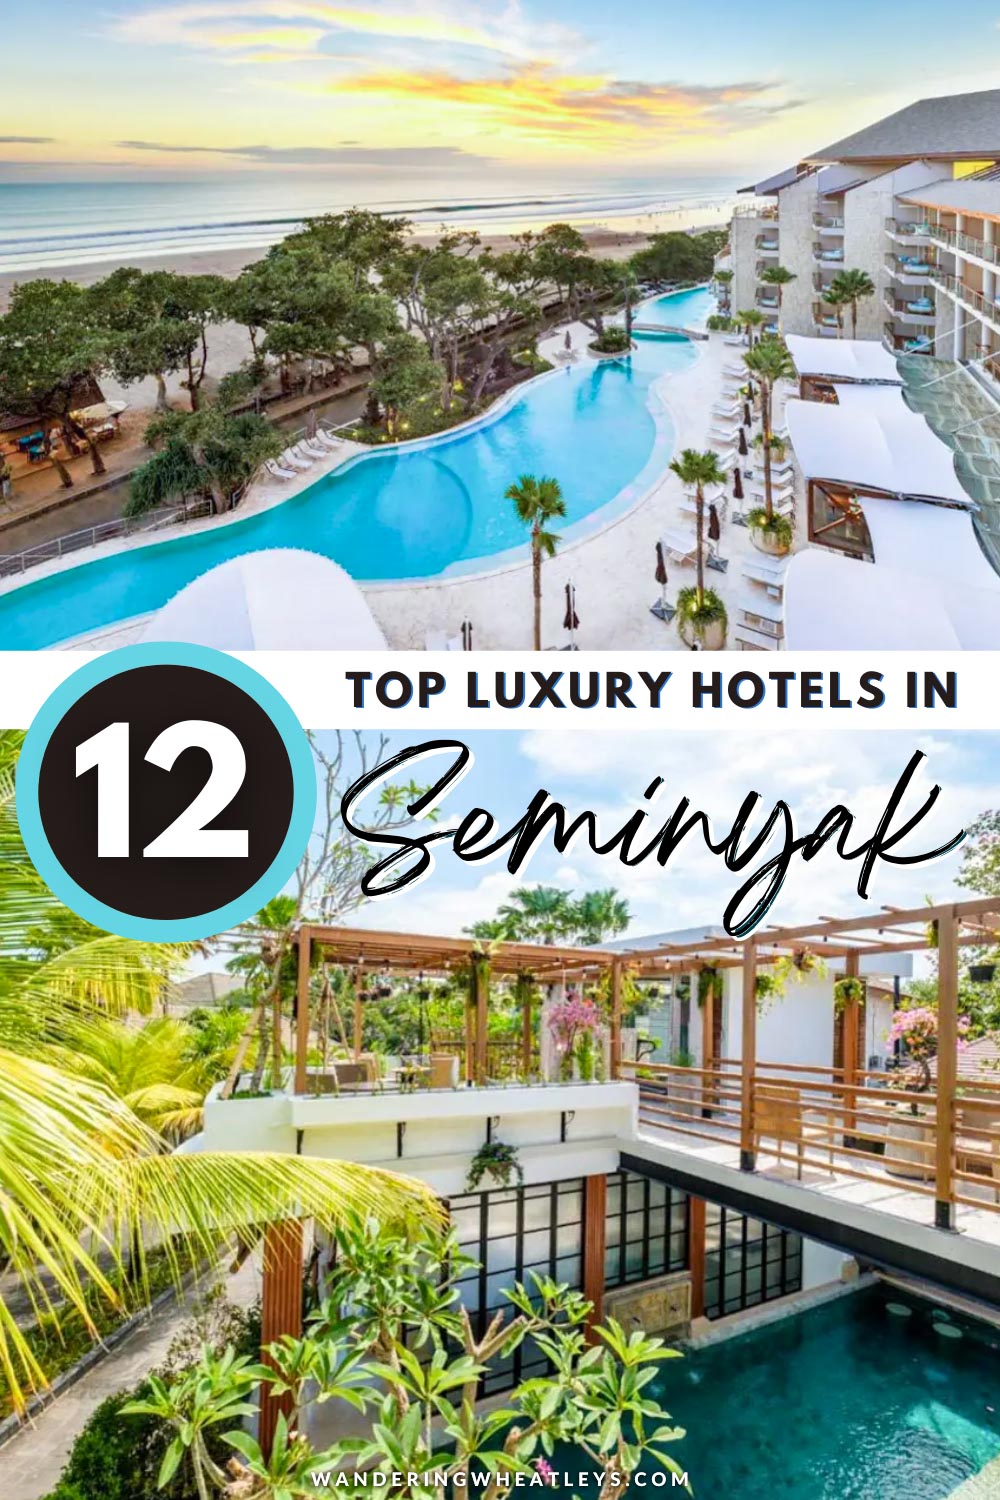 The Best Luxury Hotels in Seminyak, Bali